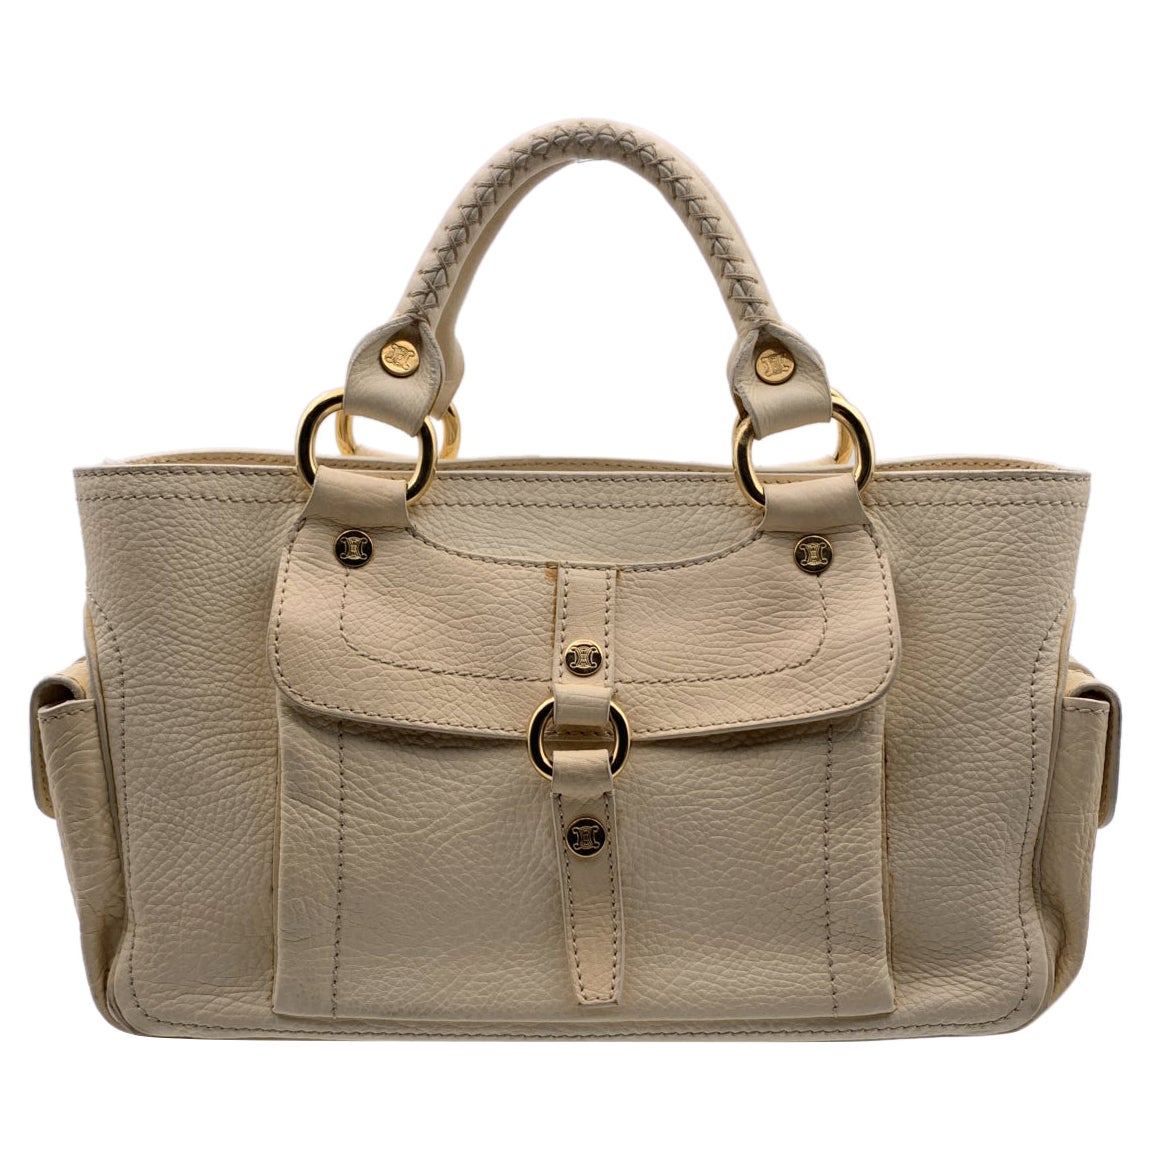 Celine Beige Leather Boogie Tote Bag Satchel Handbag